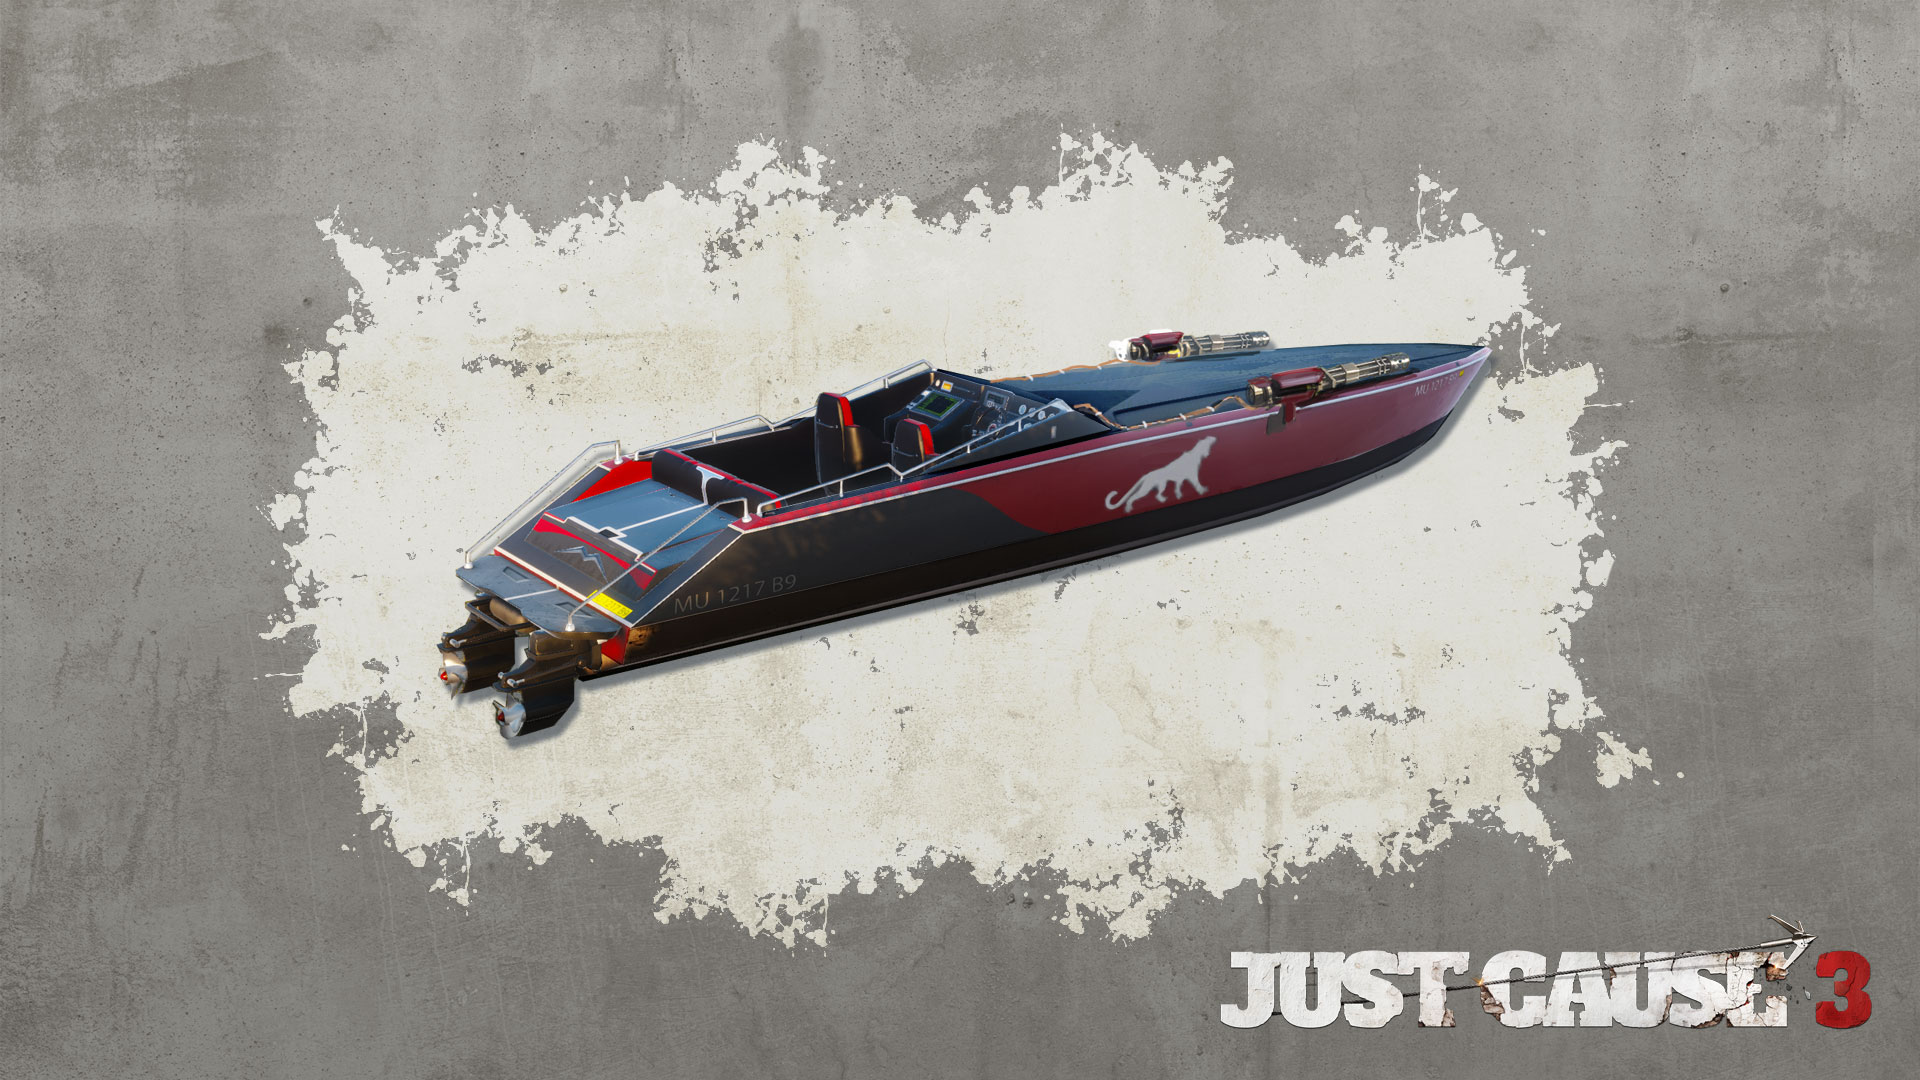 (1.56$) Just Cause 3 - Mini-Gun Racing Boat DLC Steam CD Key